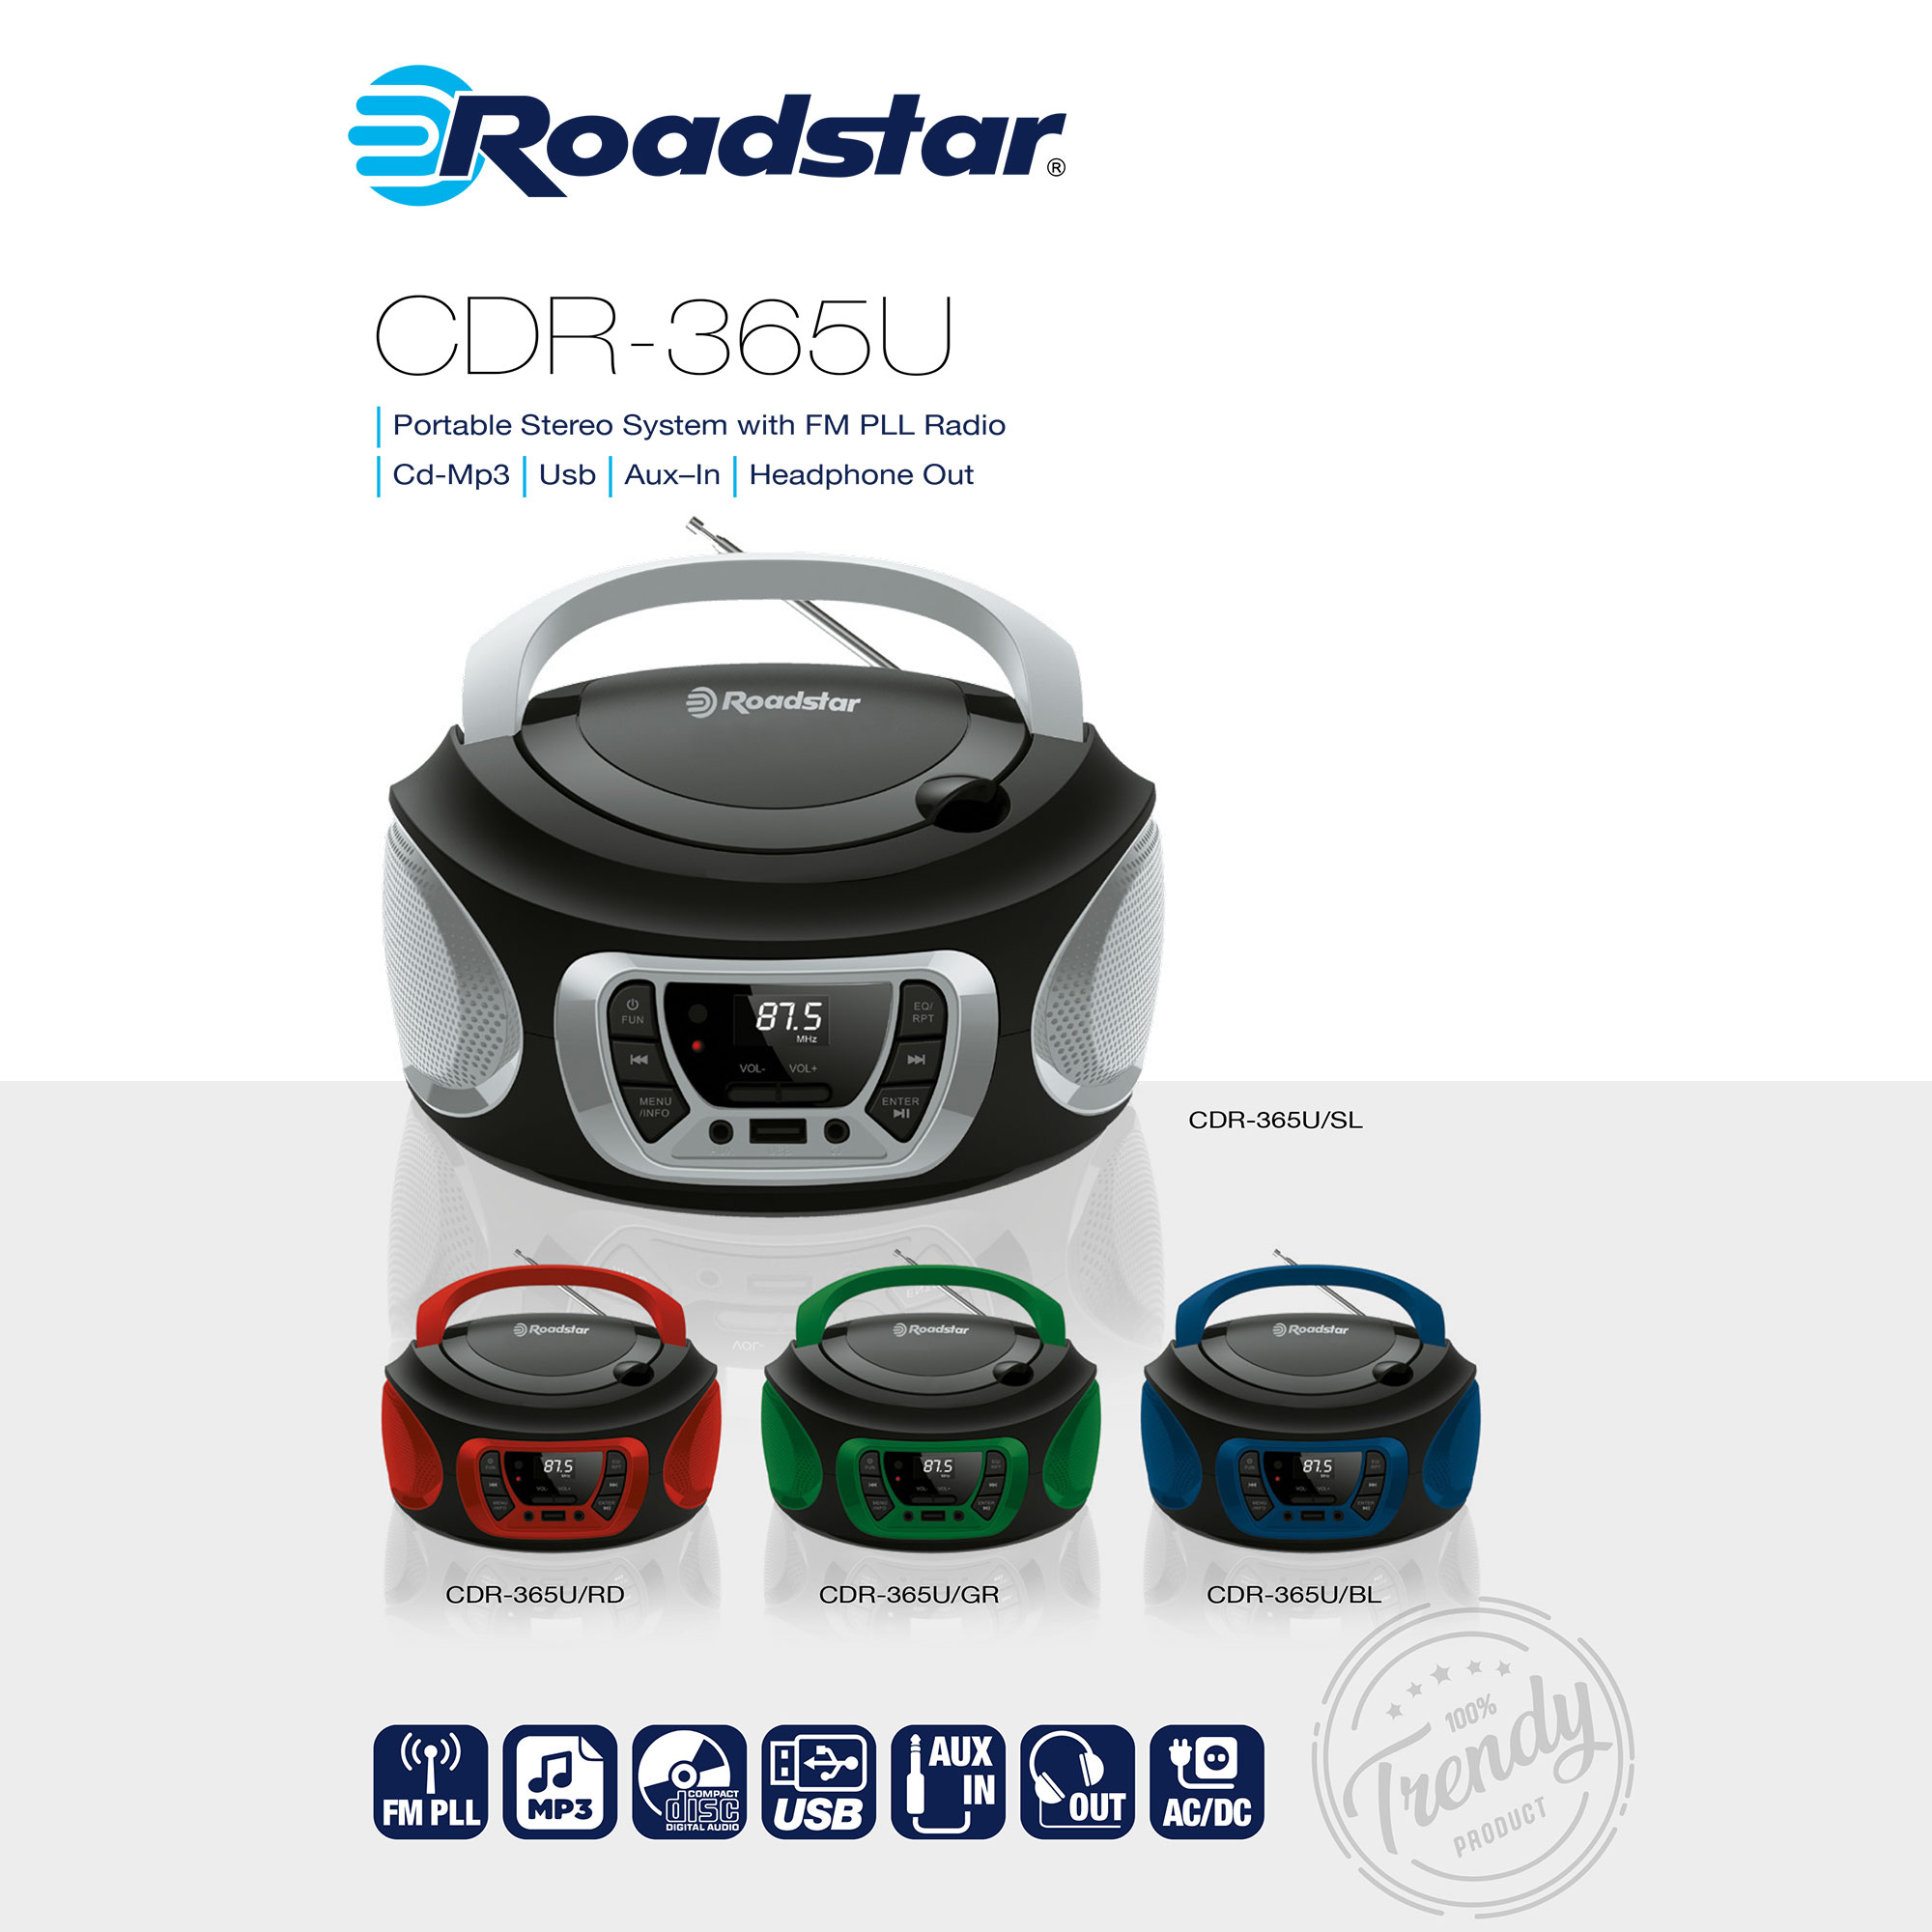 Grün CDR-365U/GR Radiorecorder, ROADSTAR